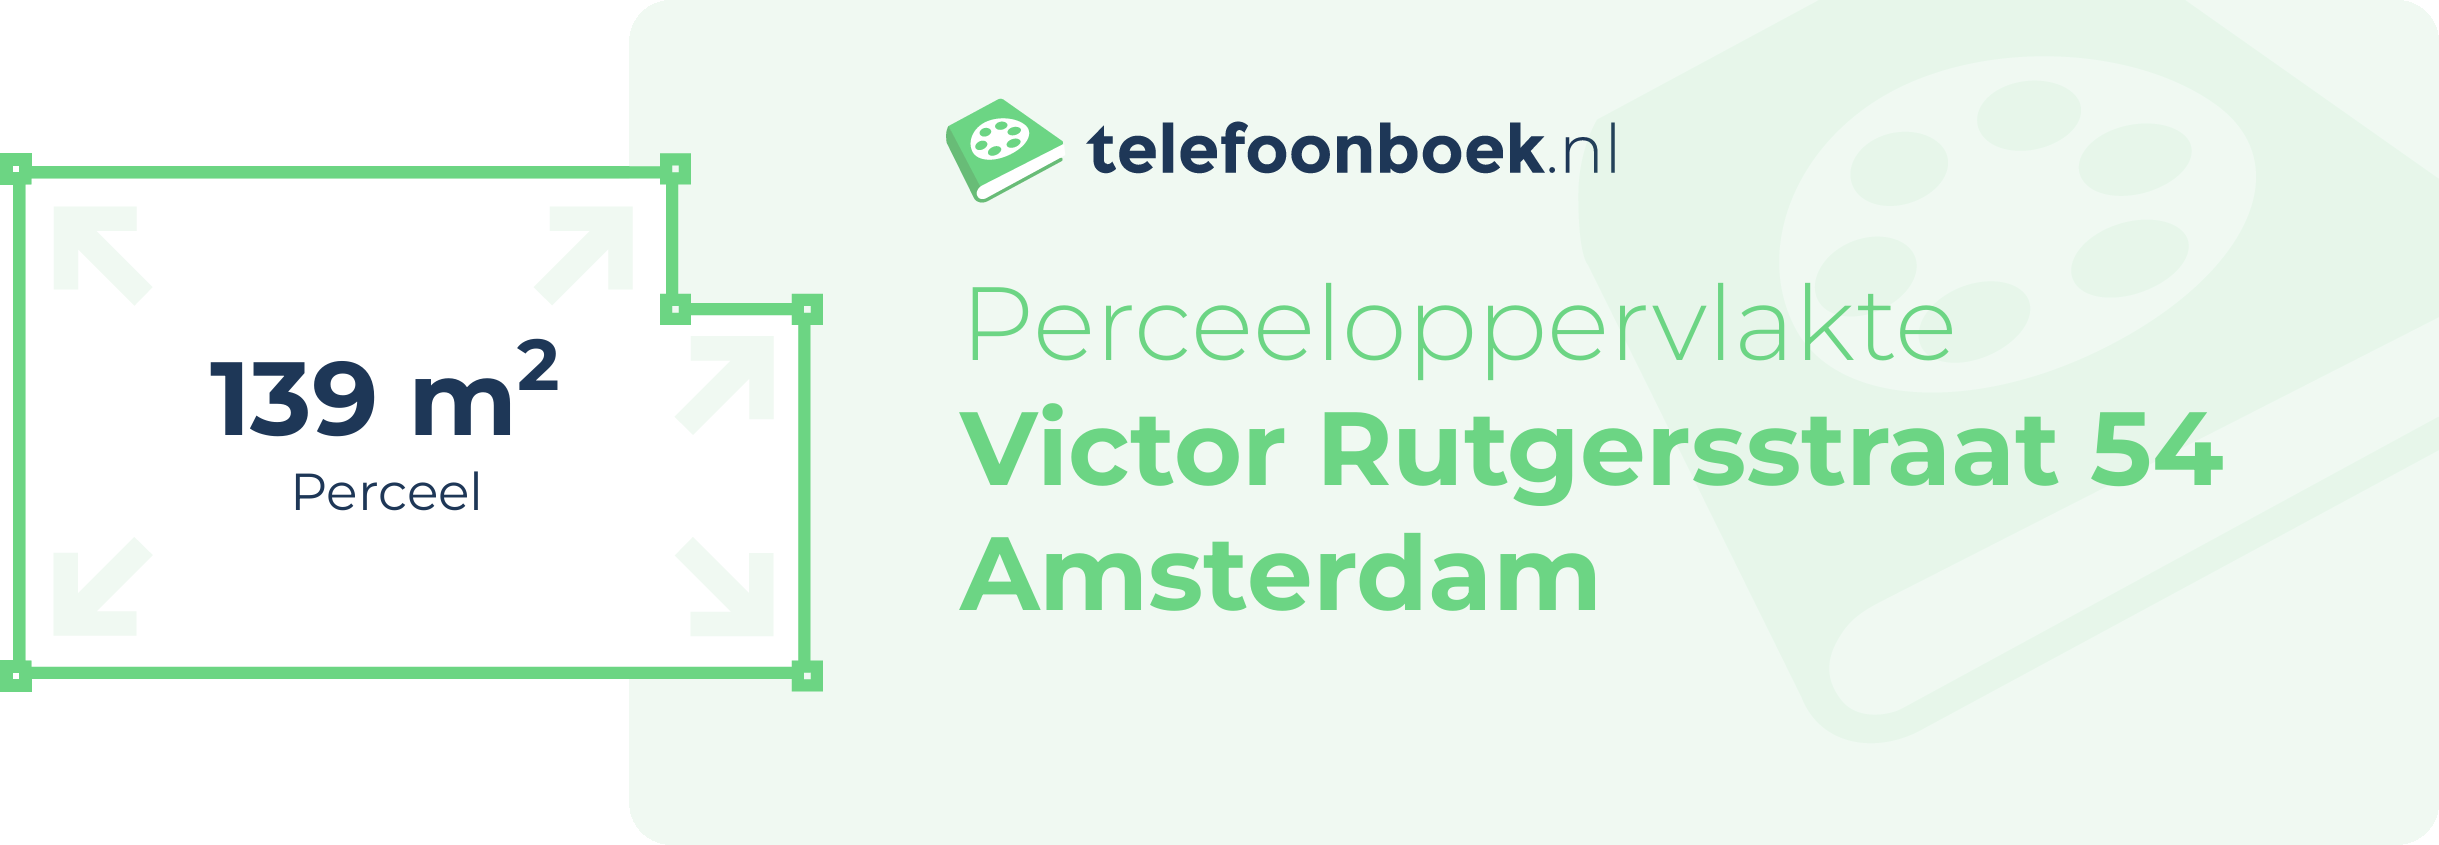 Perceeloppervlakte Victor Rutgersstraat 54 Amsterdam